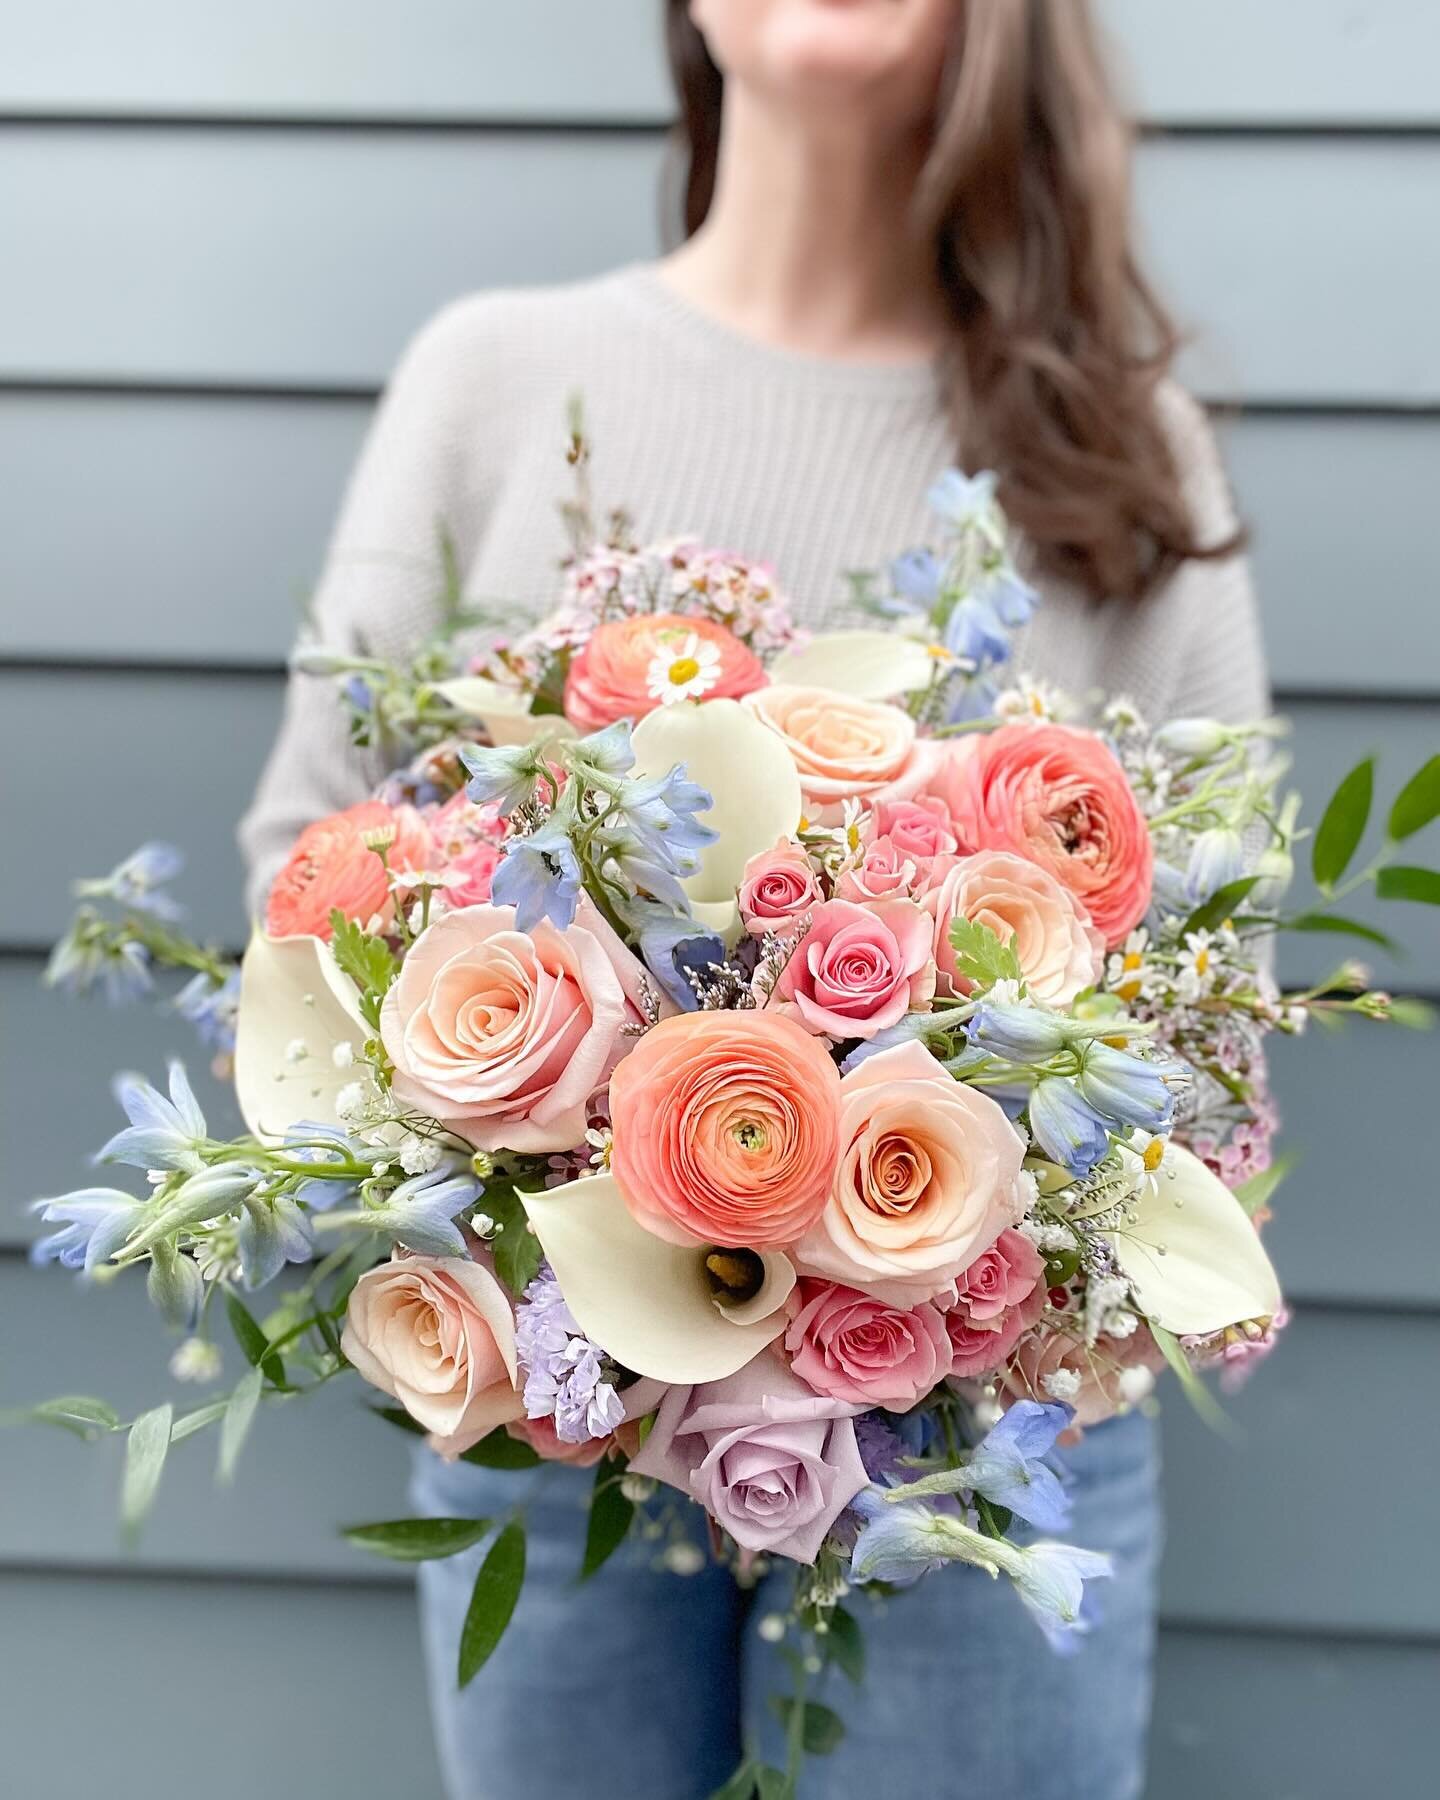 Gabby&rsquo;s spring bouquet was a stunner!
.
.
.
.
.
#weddingflowers #honeyandsageflowers #weddingflorist #bouquet #weddinginspiration